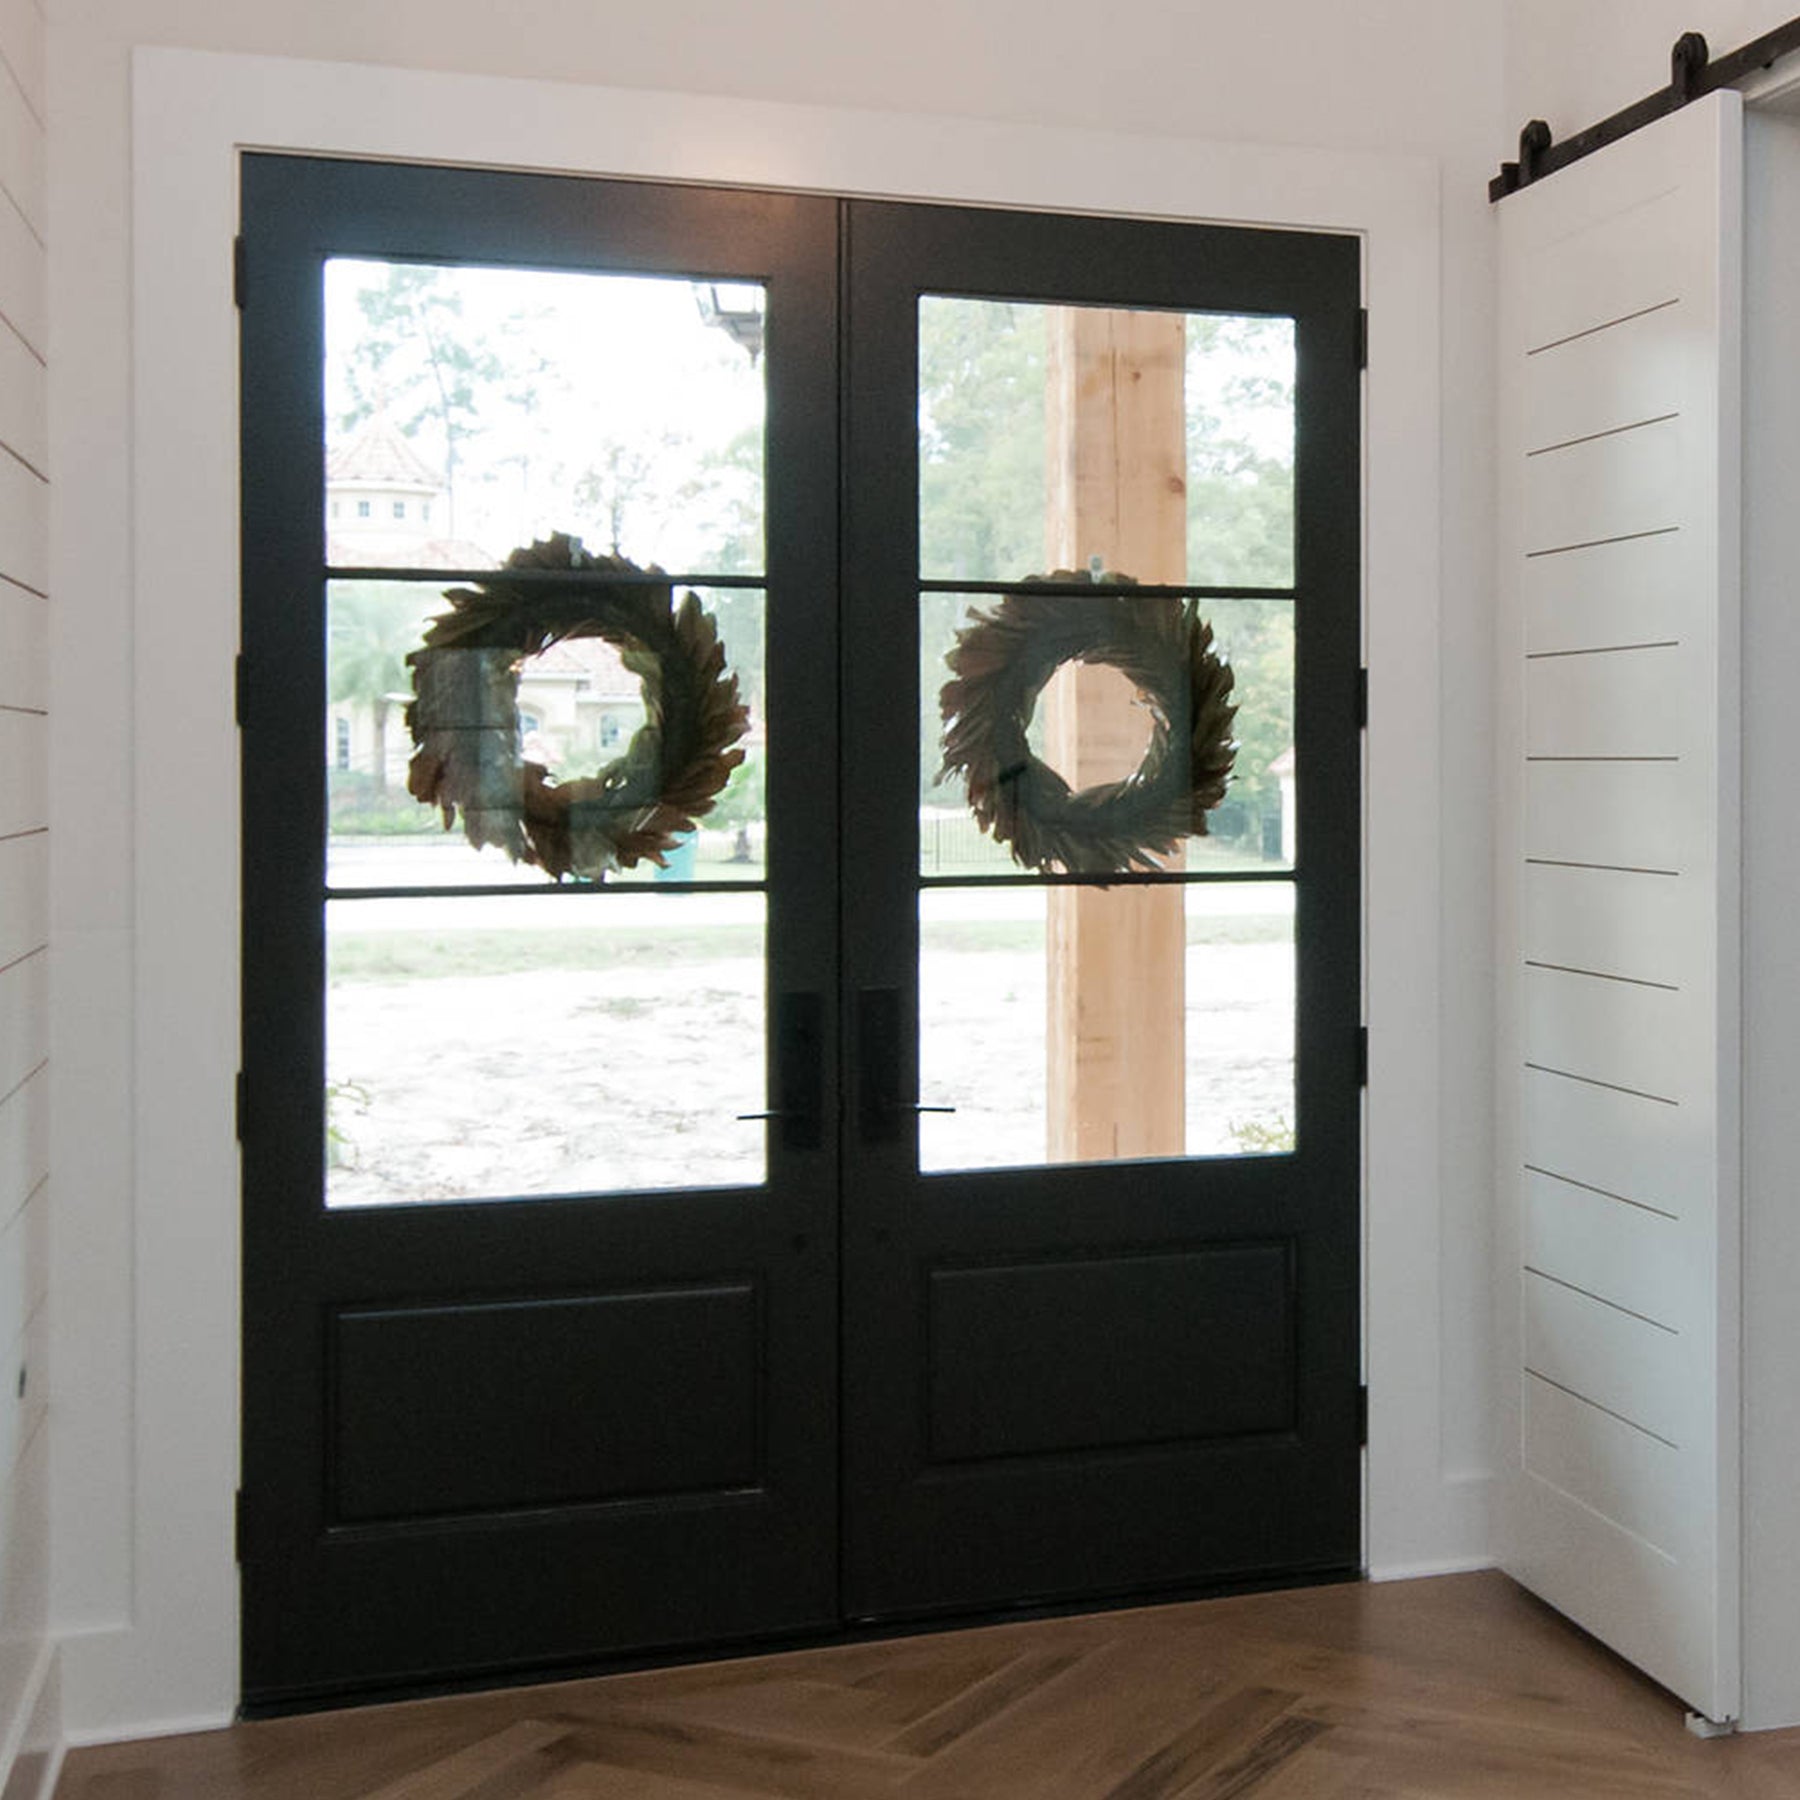 gloryirondoors steel made double door with tempered glass